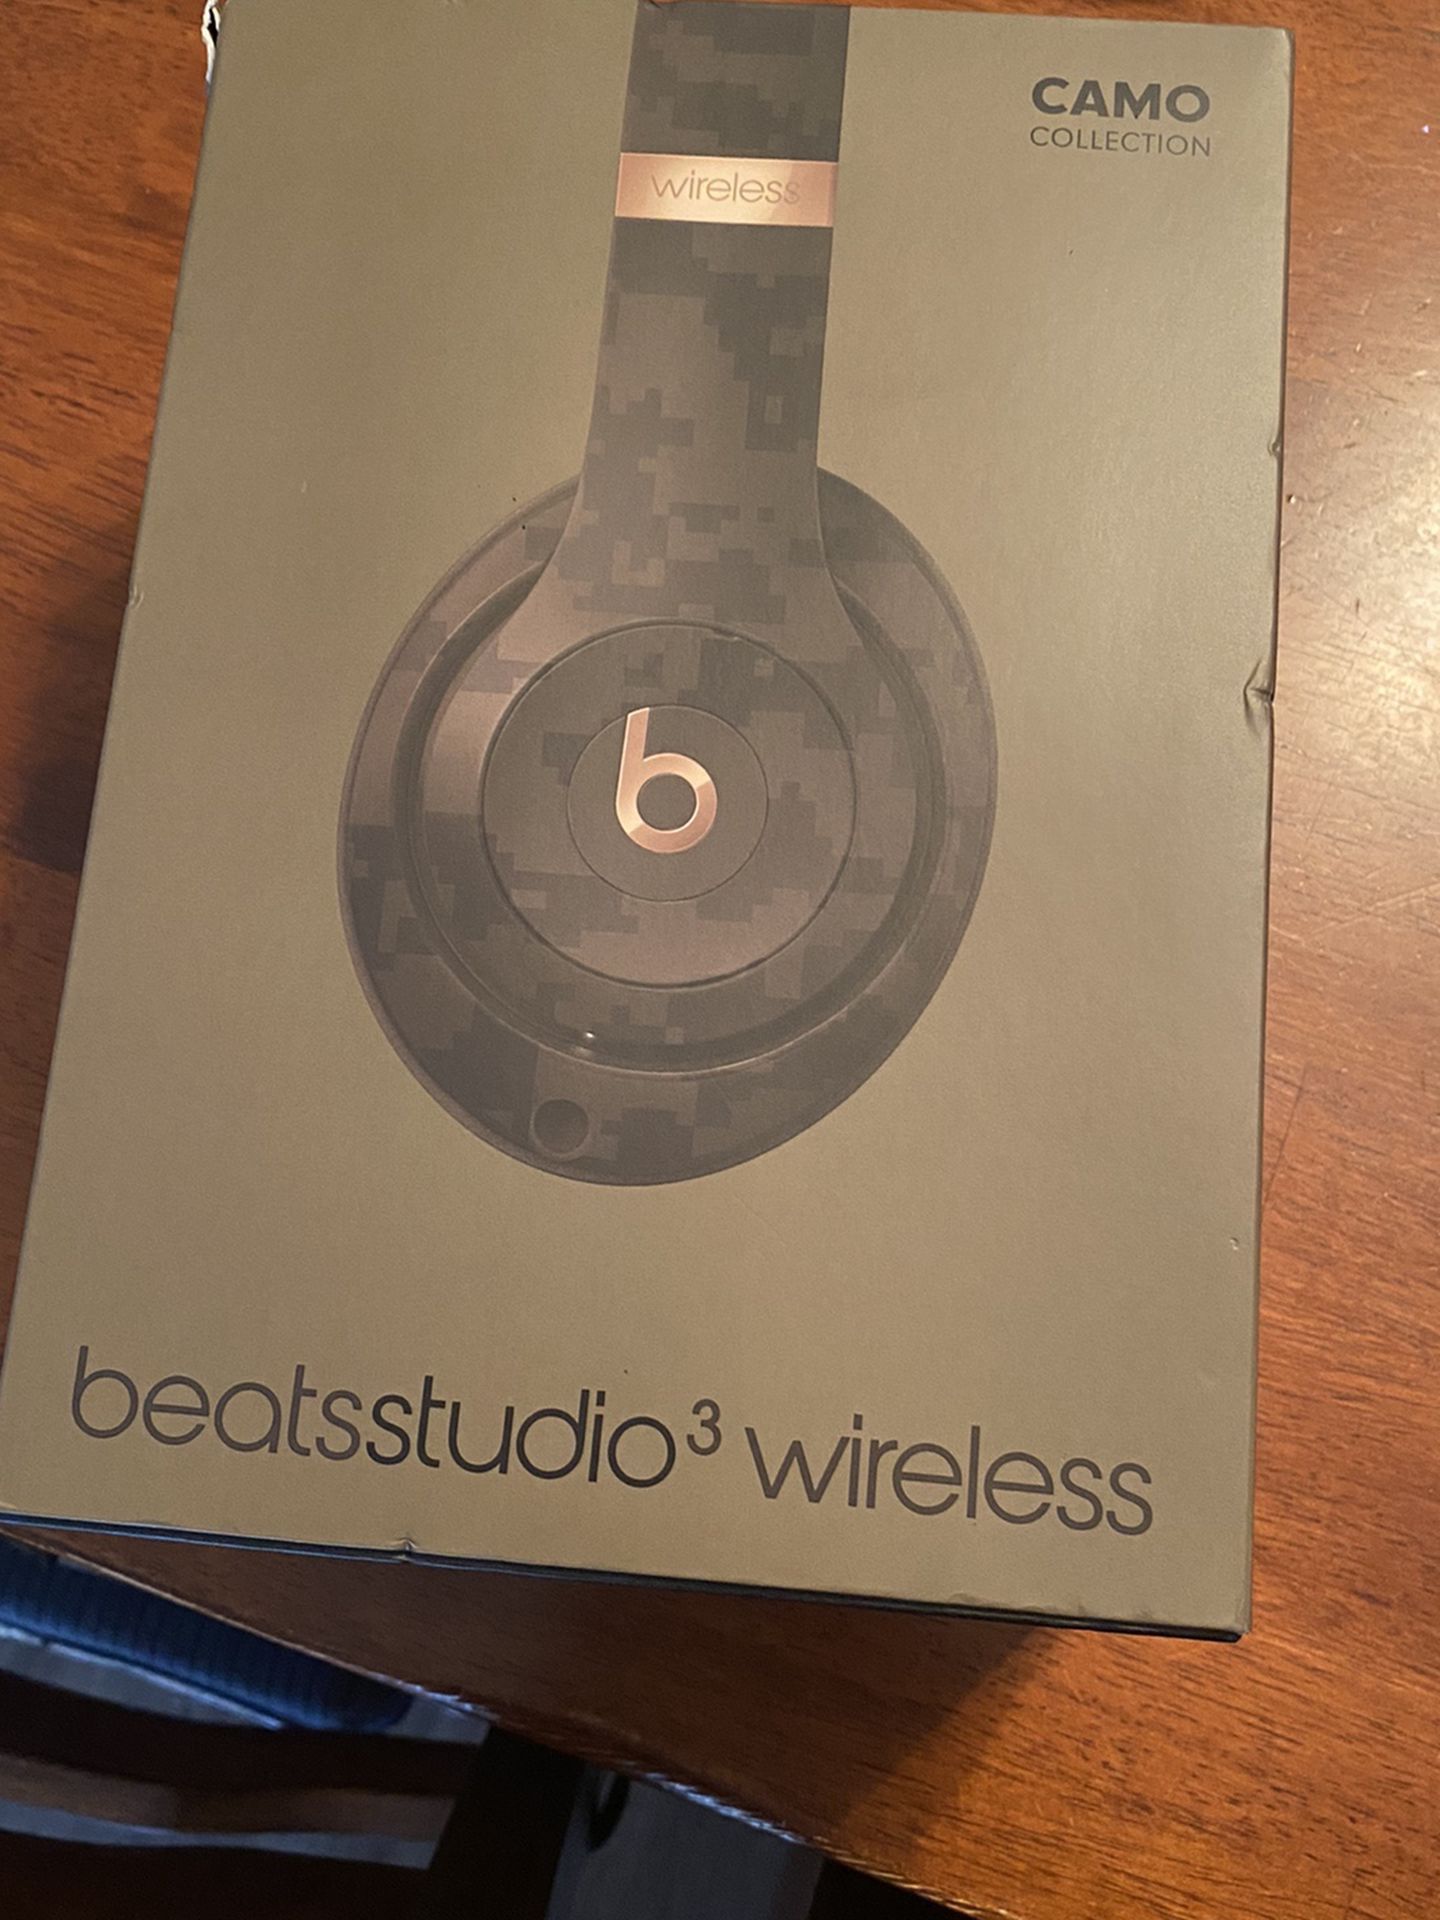 Beats Studio 3 Camo edition $140